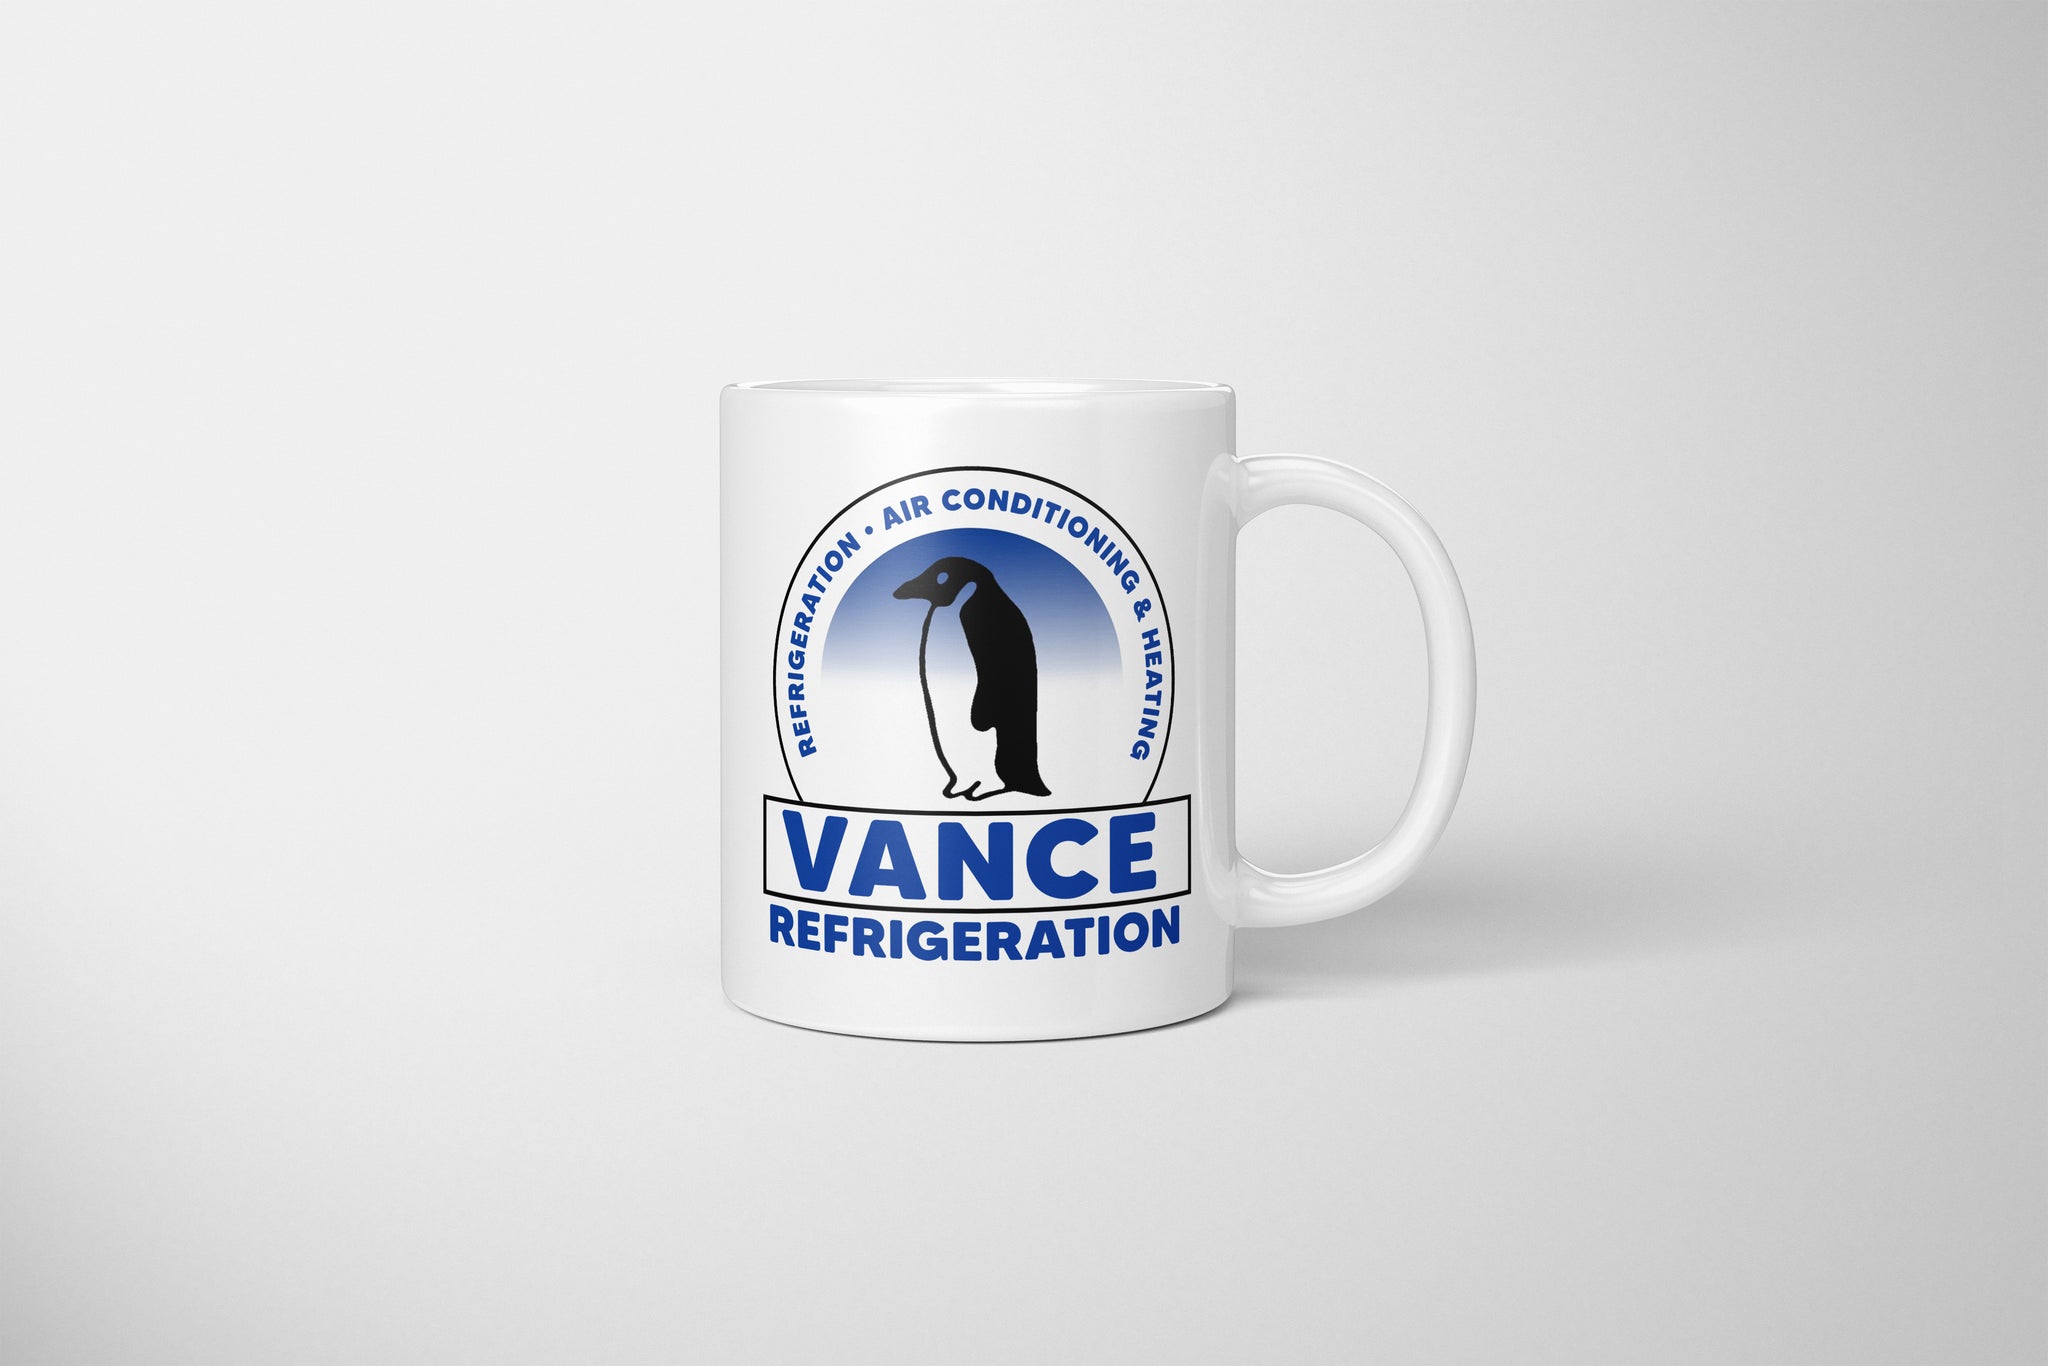 Vance Refrigeration Mug, Bob Vance, Vance Refrigeration, Vance Refrigeration Logo, Brand, Office USA, The Office Fan Gift, Office UK, TV Mug